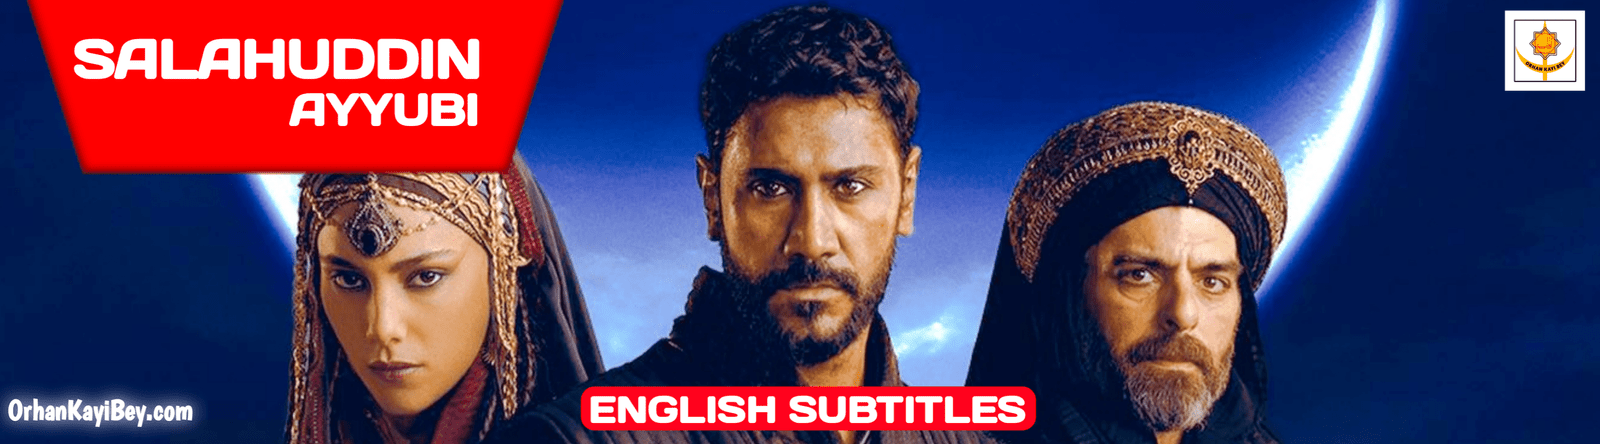 Selahaddin Eyyubi With English Subtitles